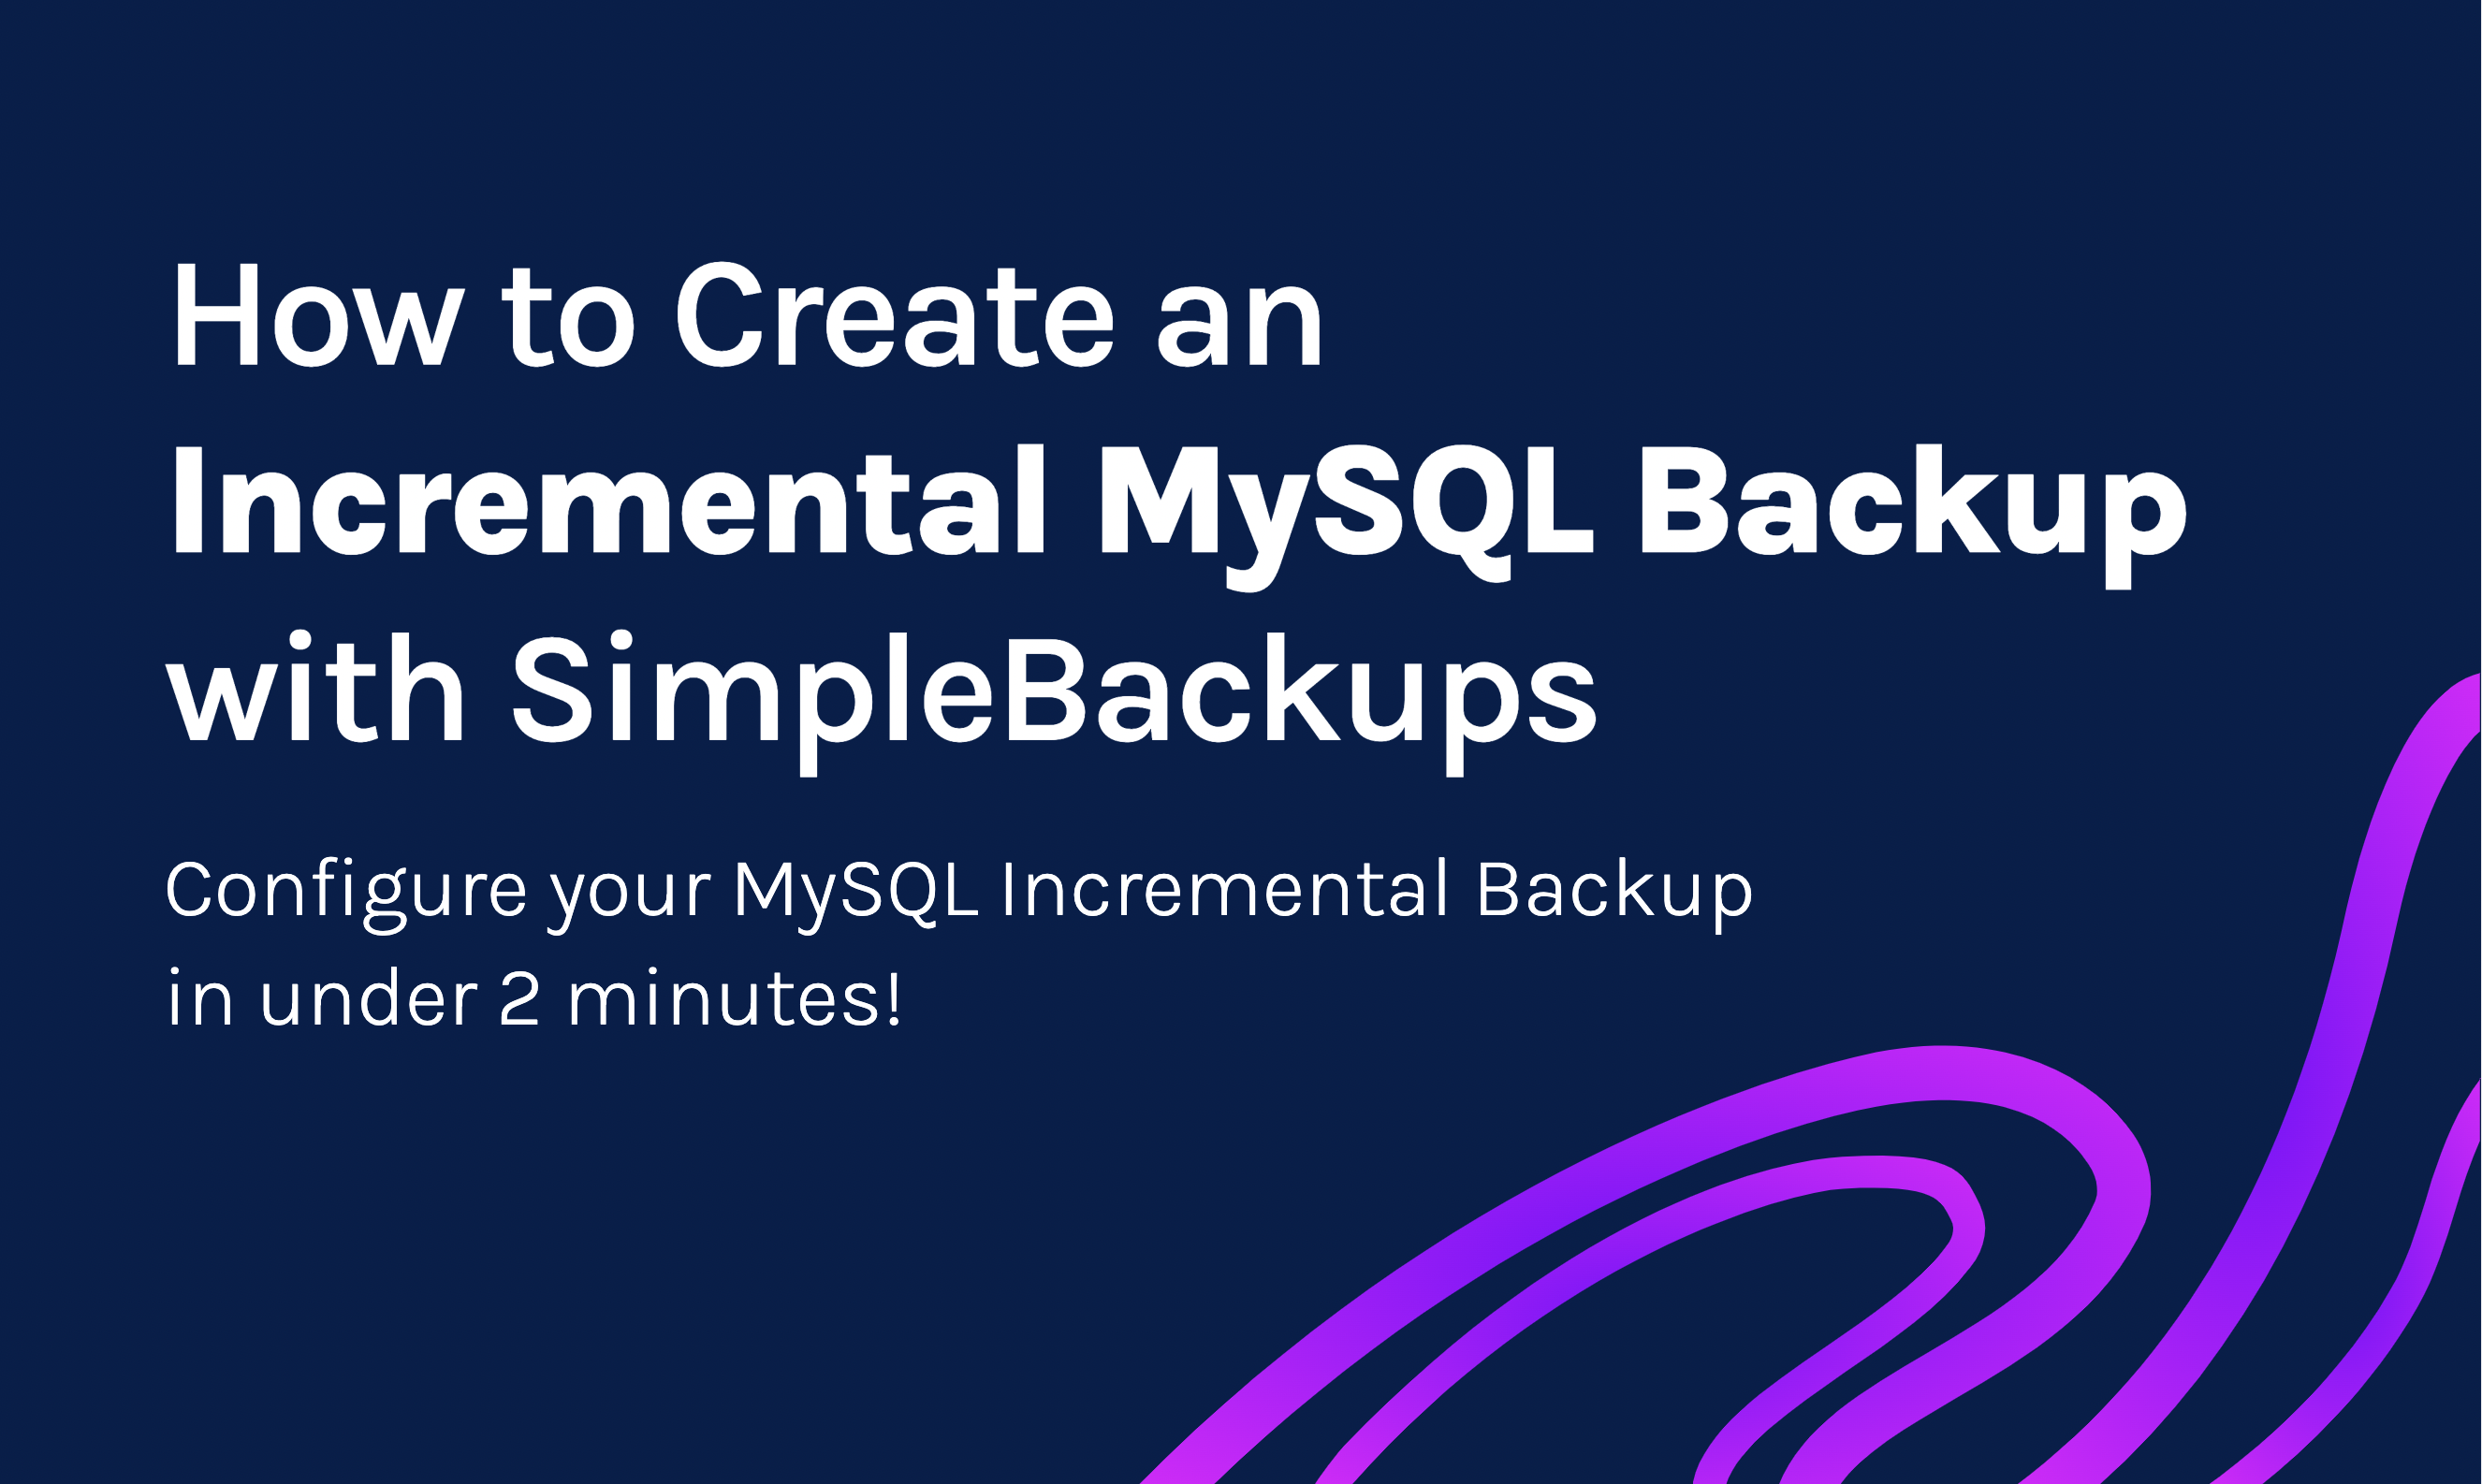 Learn how to Create an Incremental MySQL Backup with SimpleBackups